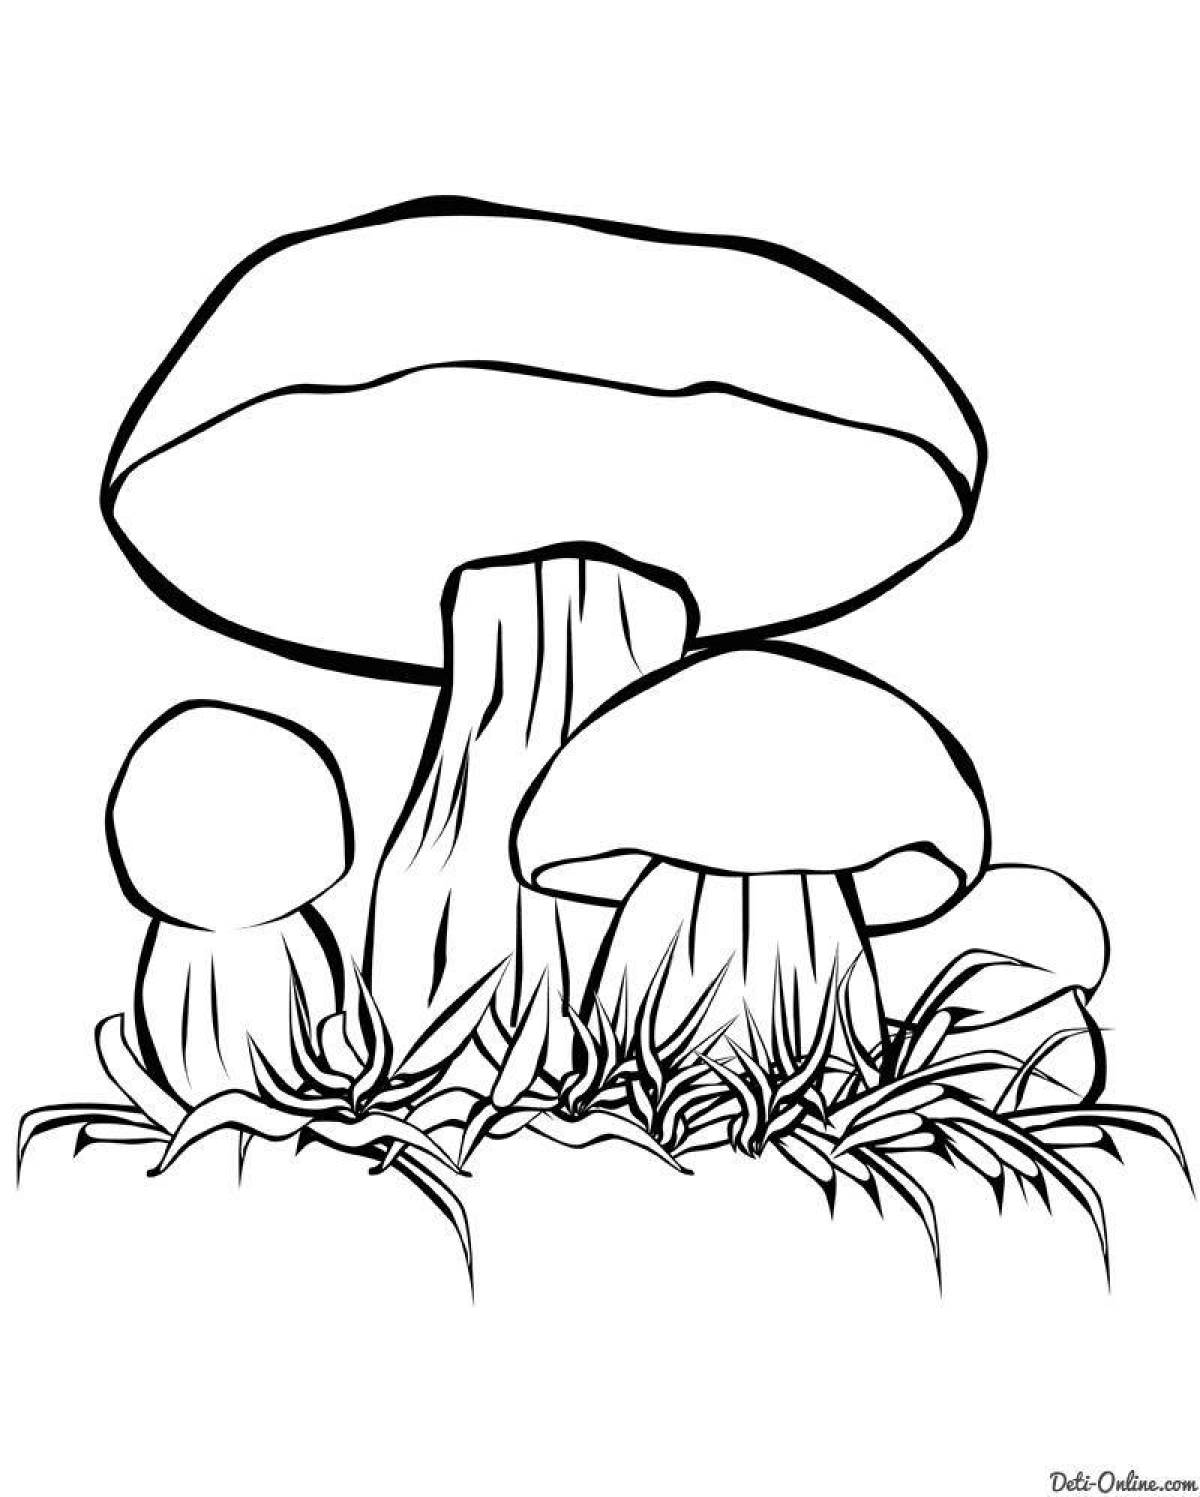 Coloring page elegant mushroom boletus